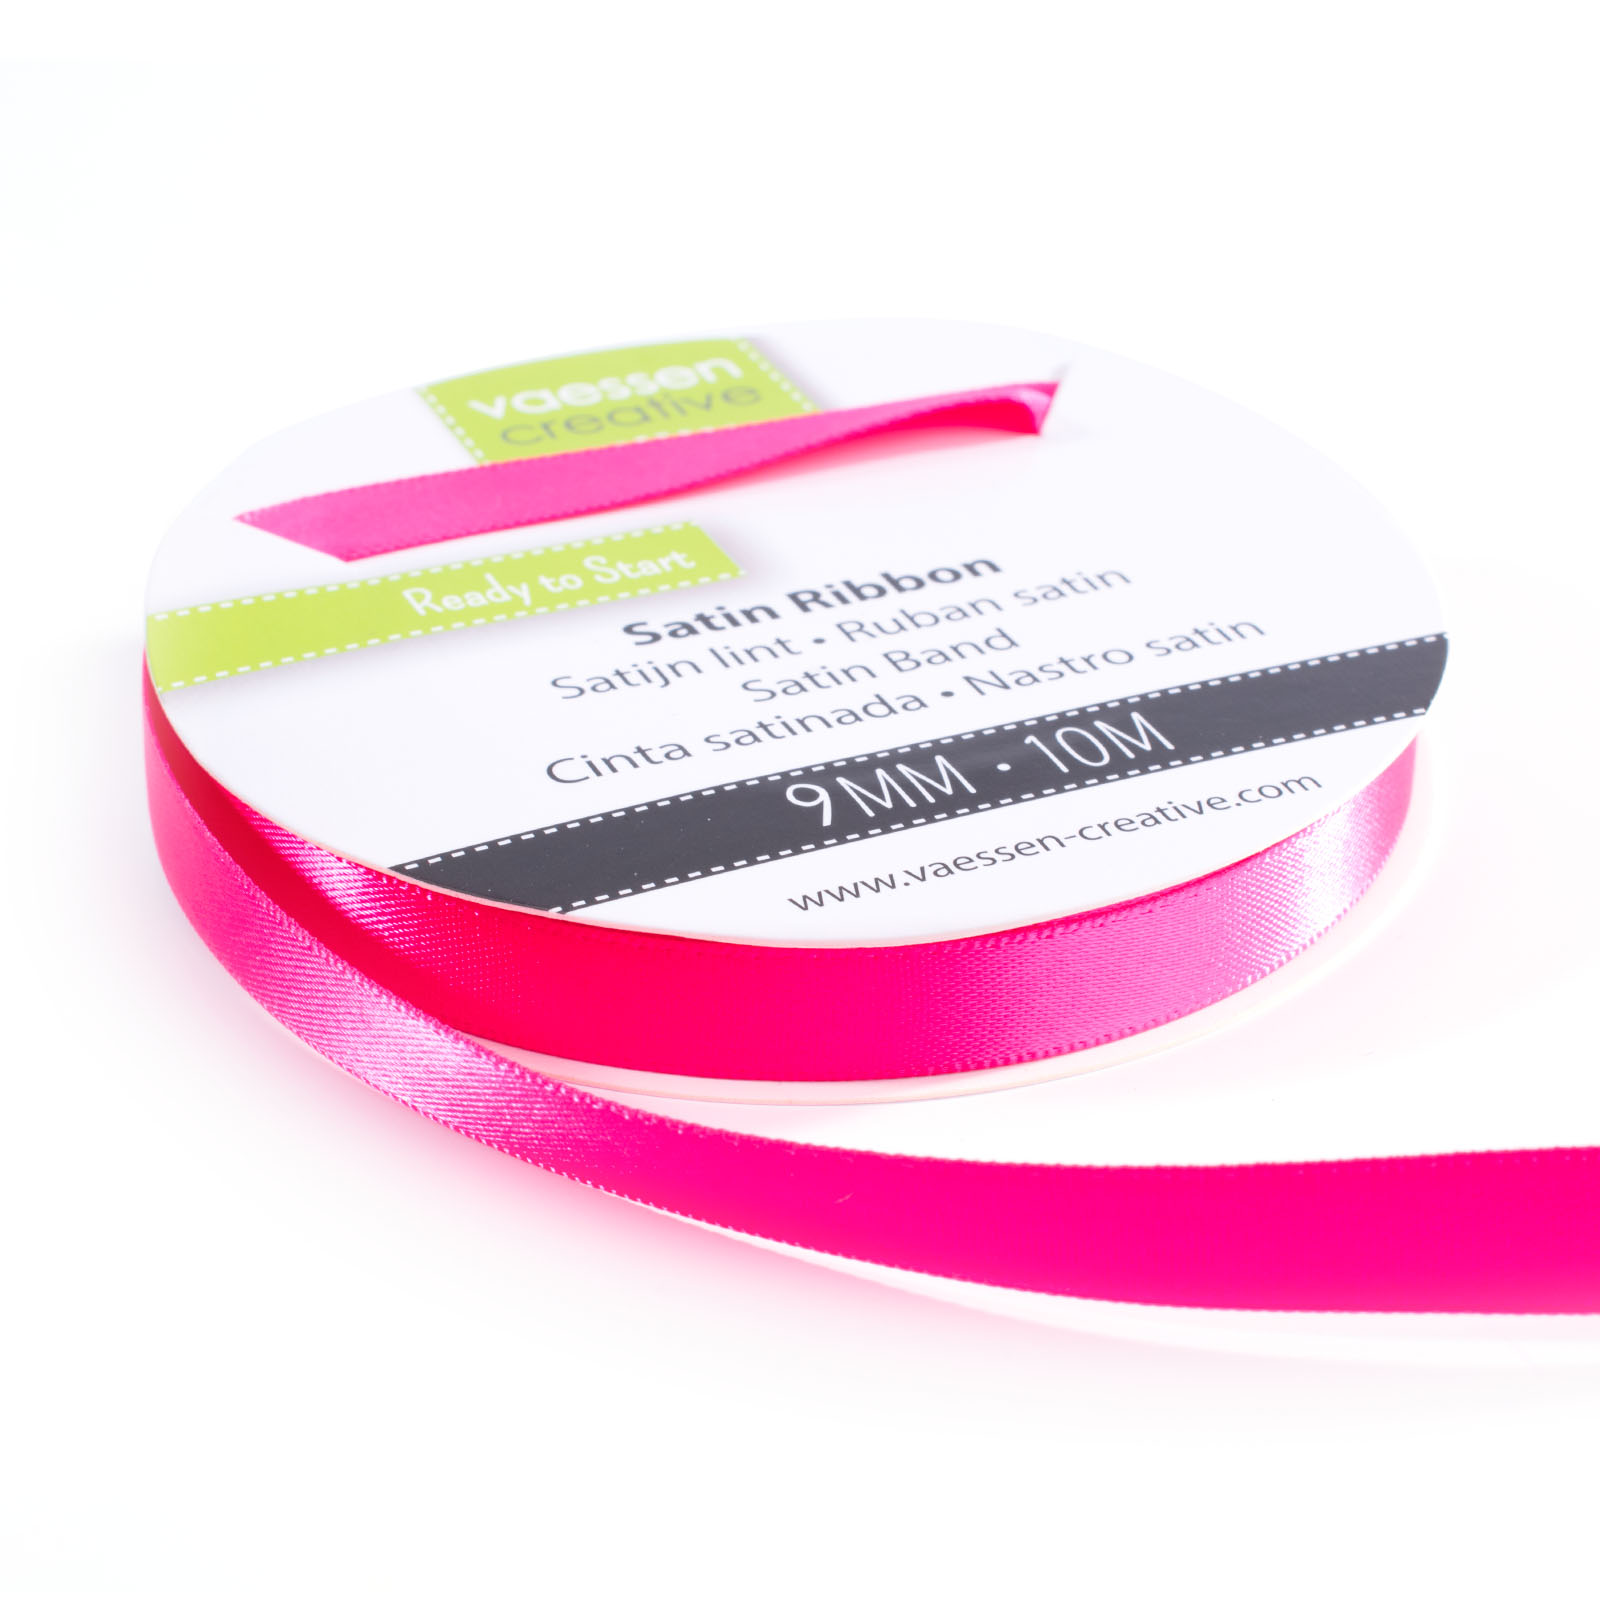 Vaessen Creative Satin Ribbon 3mmx10m Pink